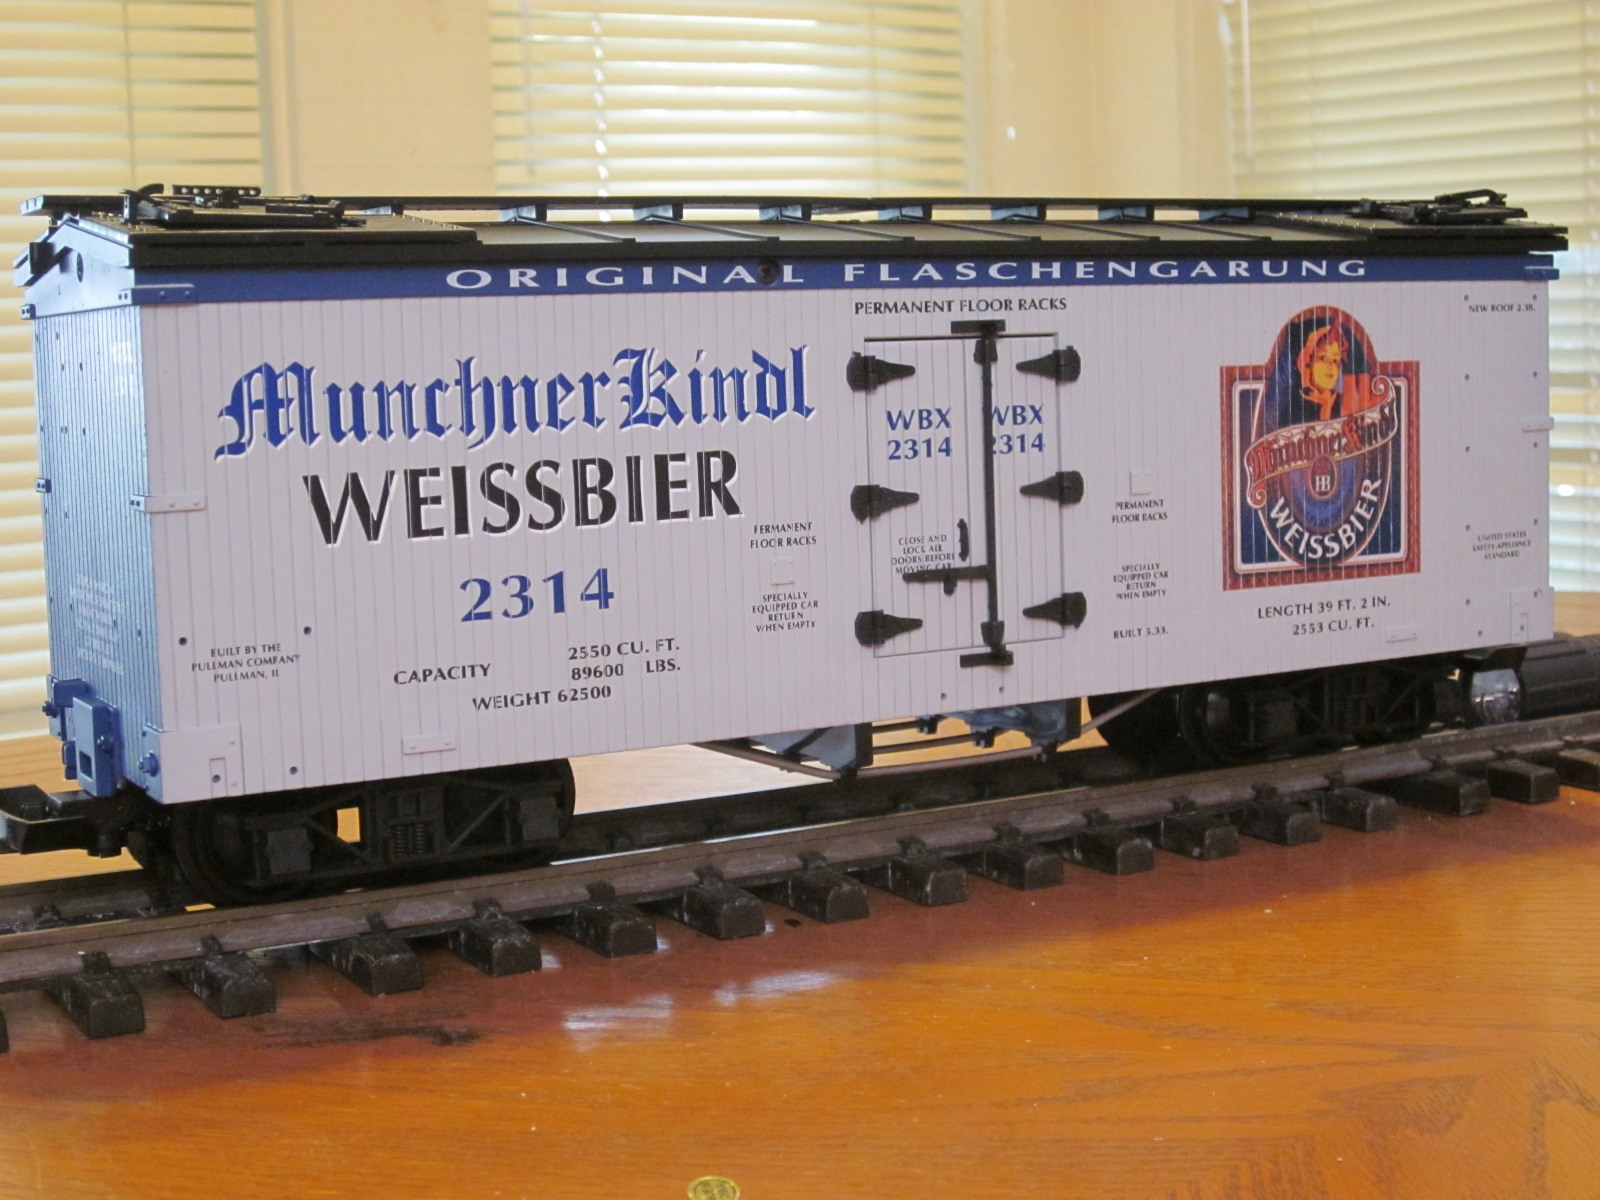 R16189 Munchnerkindl Weissbier WBX 2314